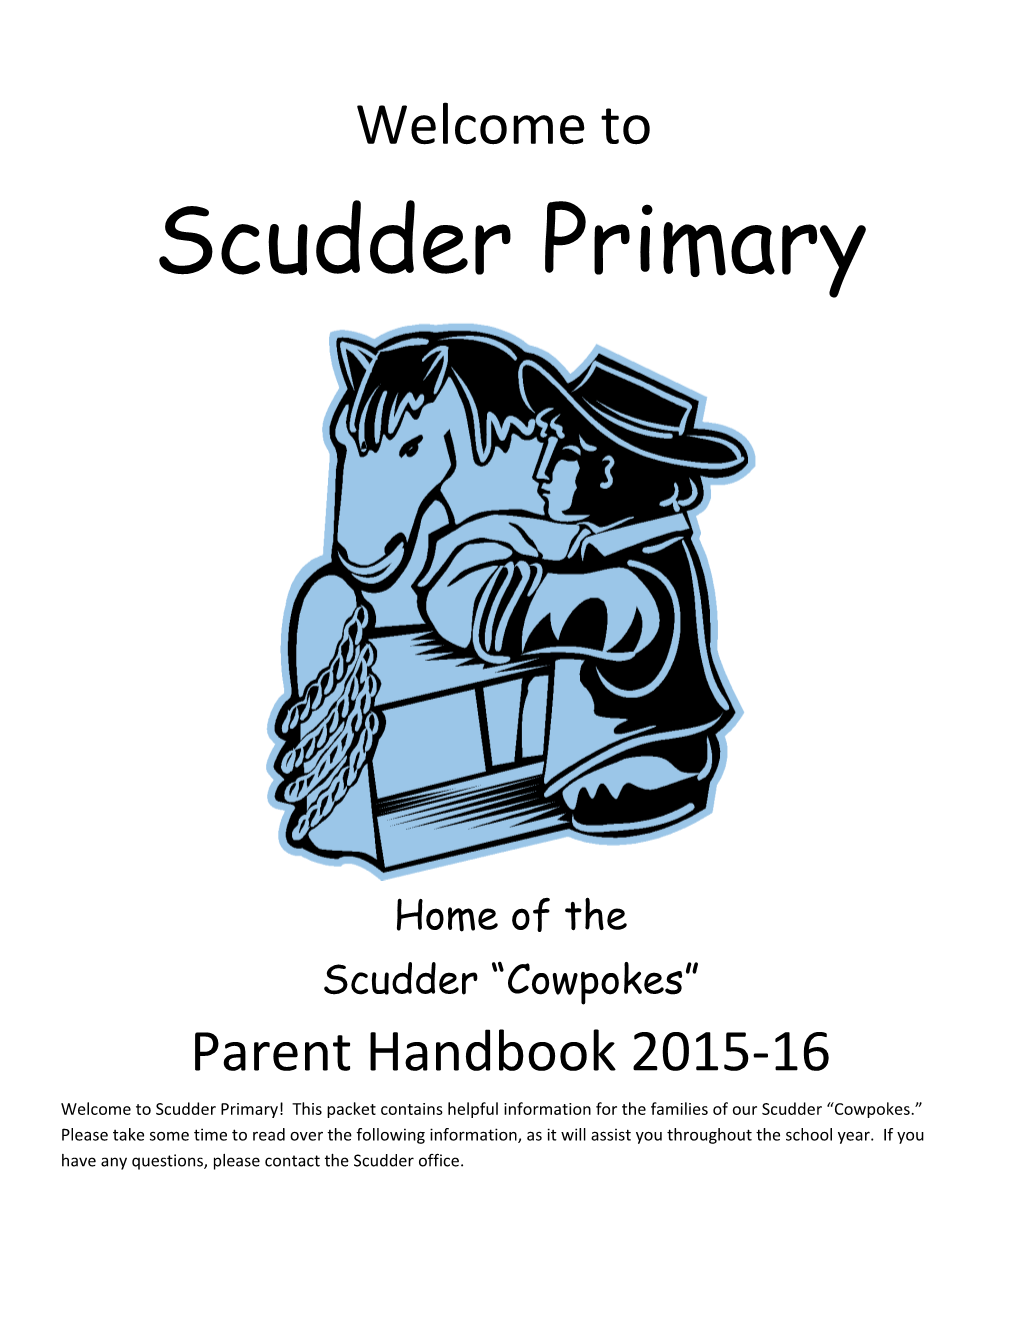 Scudder Primary